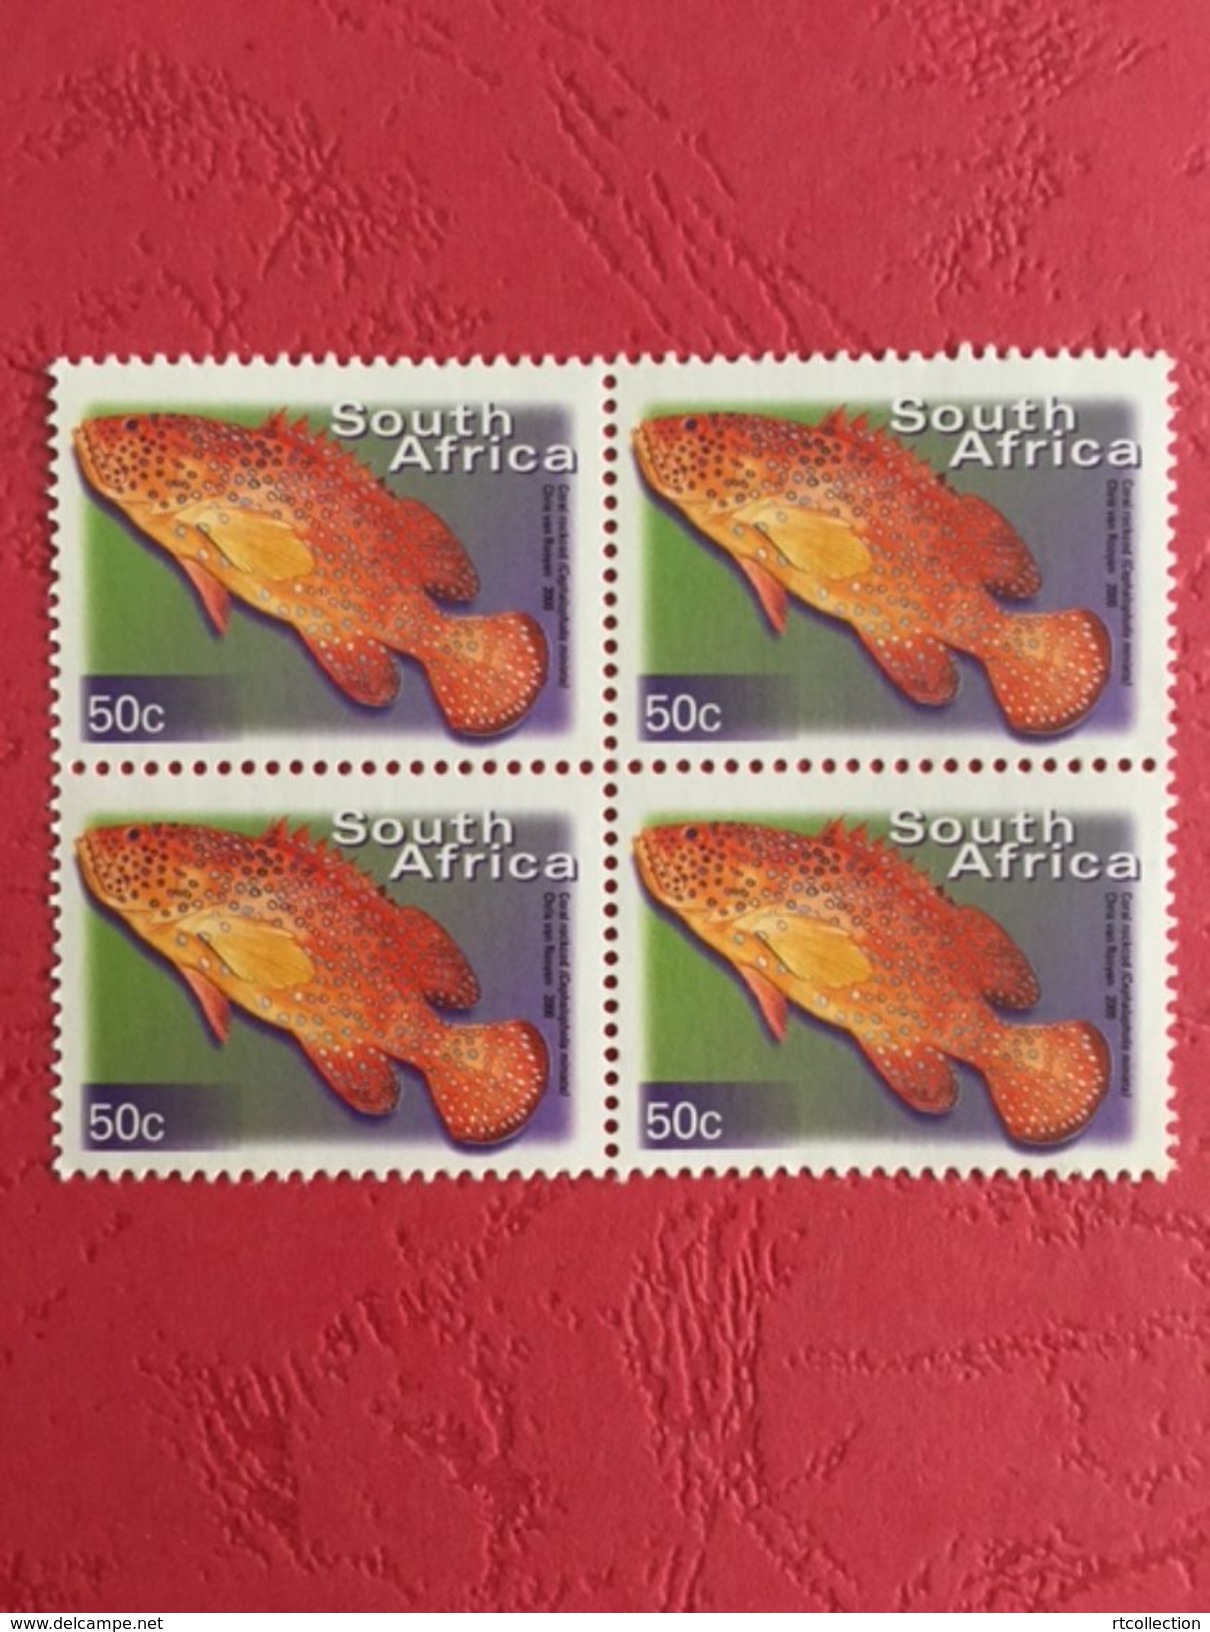 South Africa 2000 Block Coral Rockcod Fishes Fish Animals Marine Life Sealife Nature Fauna 50c Stamps MNH SG 1210 - Blocks & Sheetlets